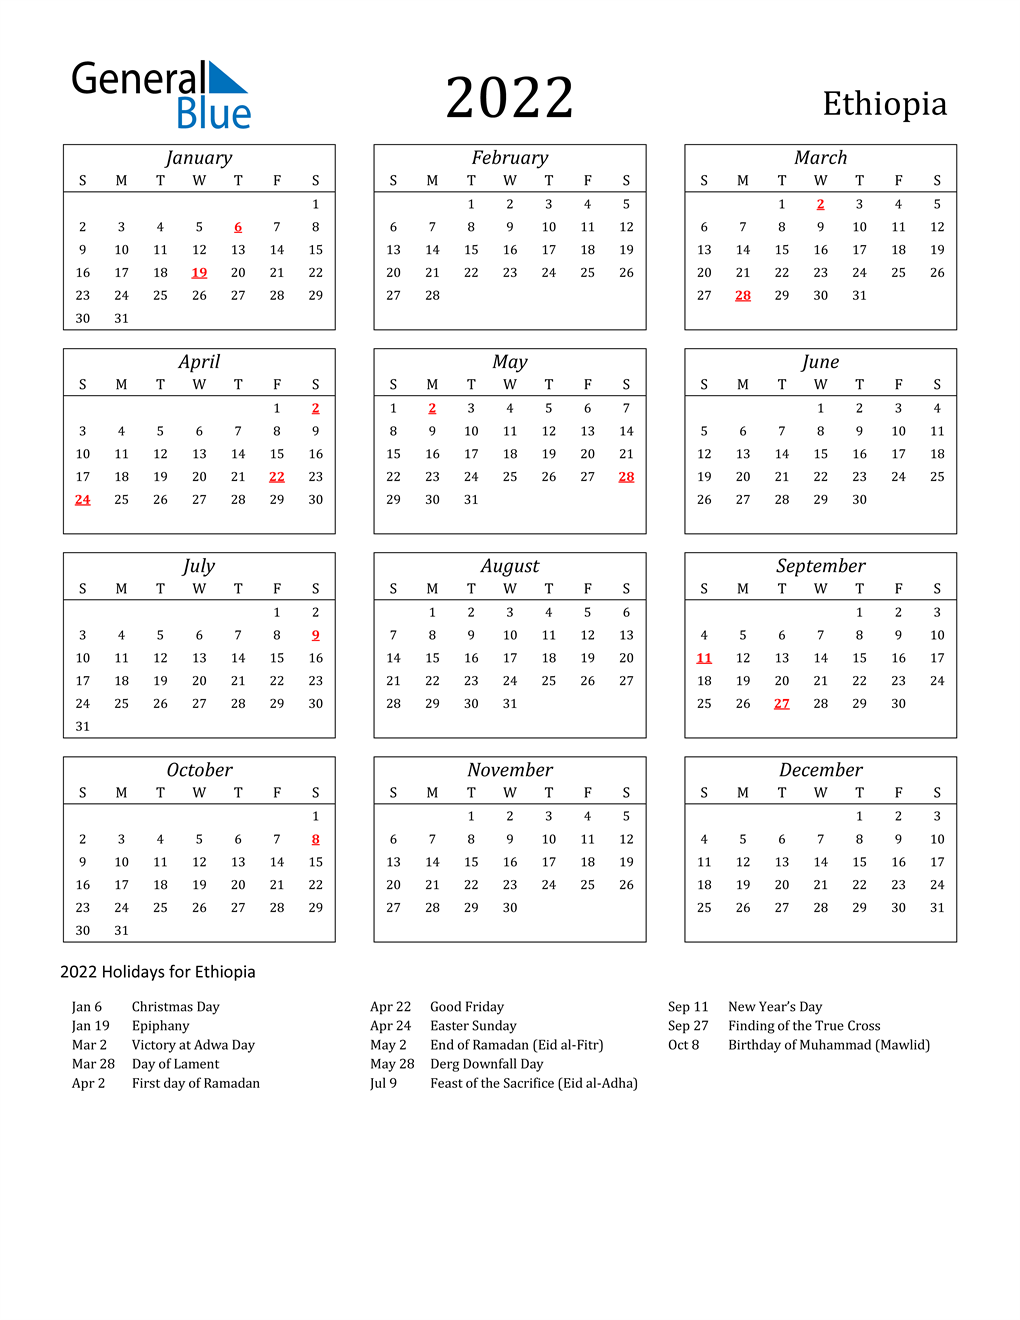 Ethiopian Calendar 2022 2022 Ethiopia Calendar With Holidays